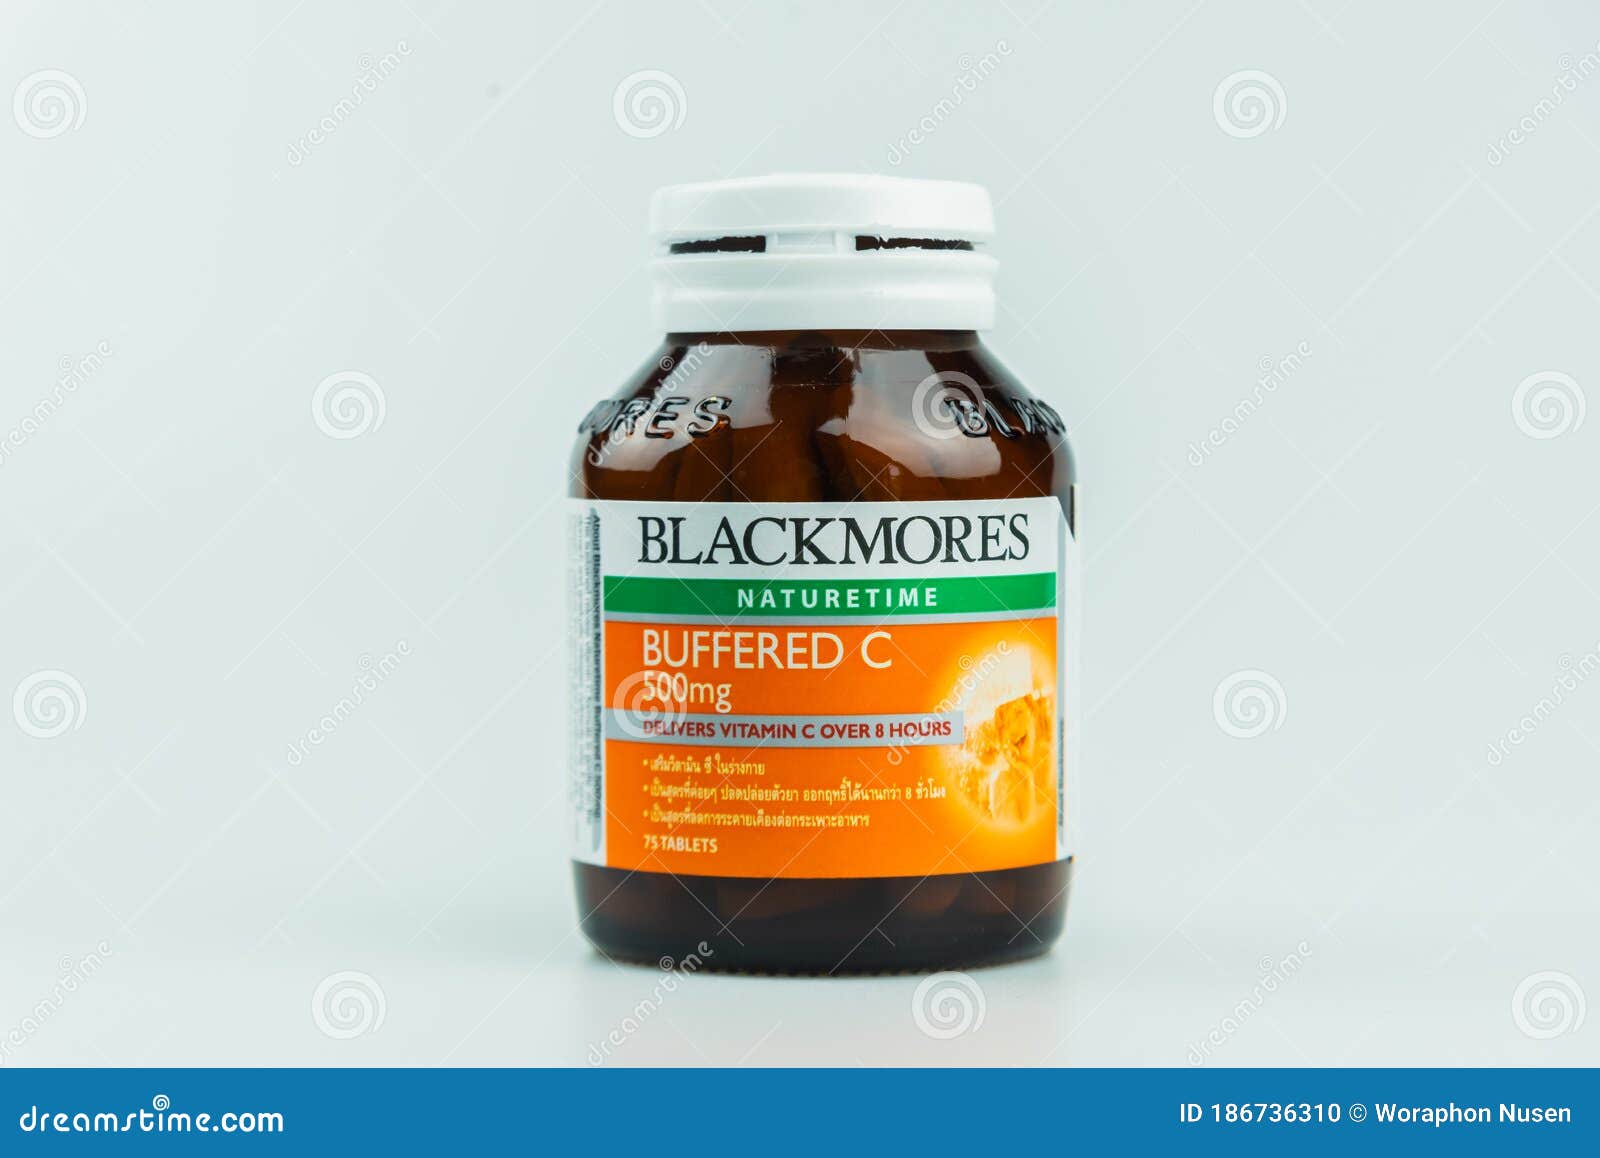 Vitamin c blackmores 500mg